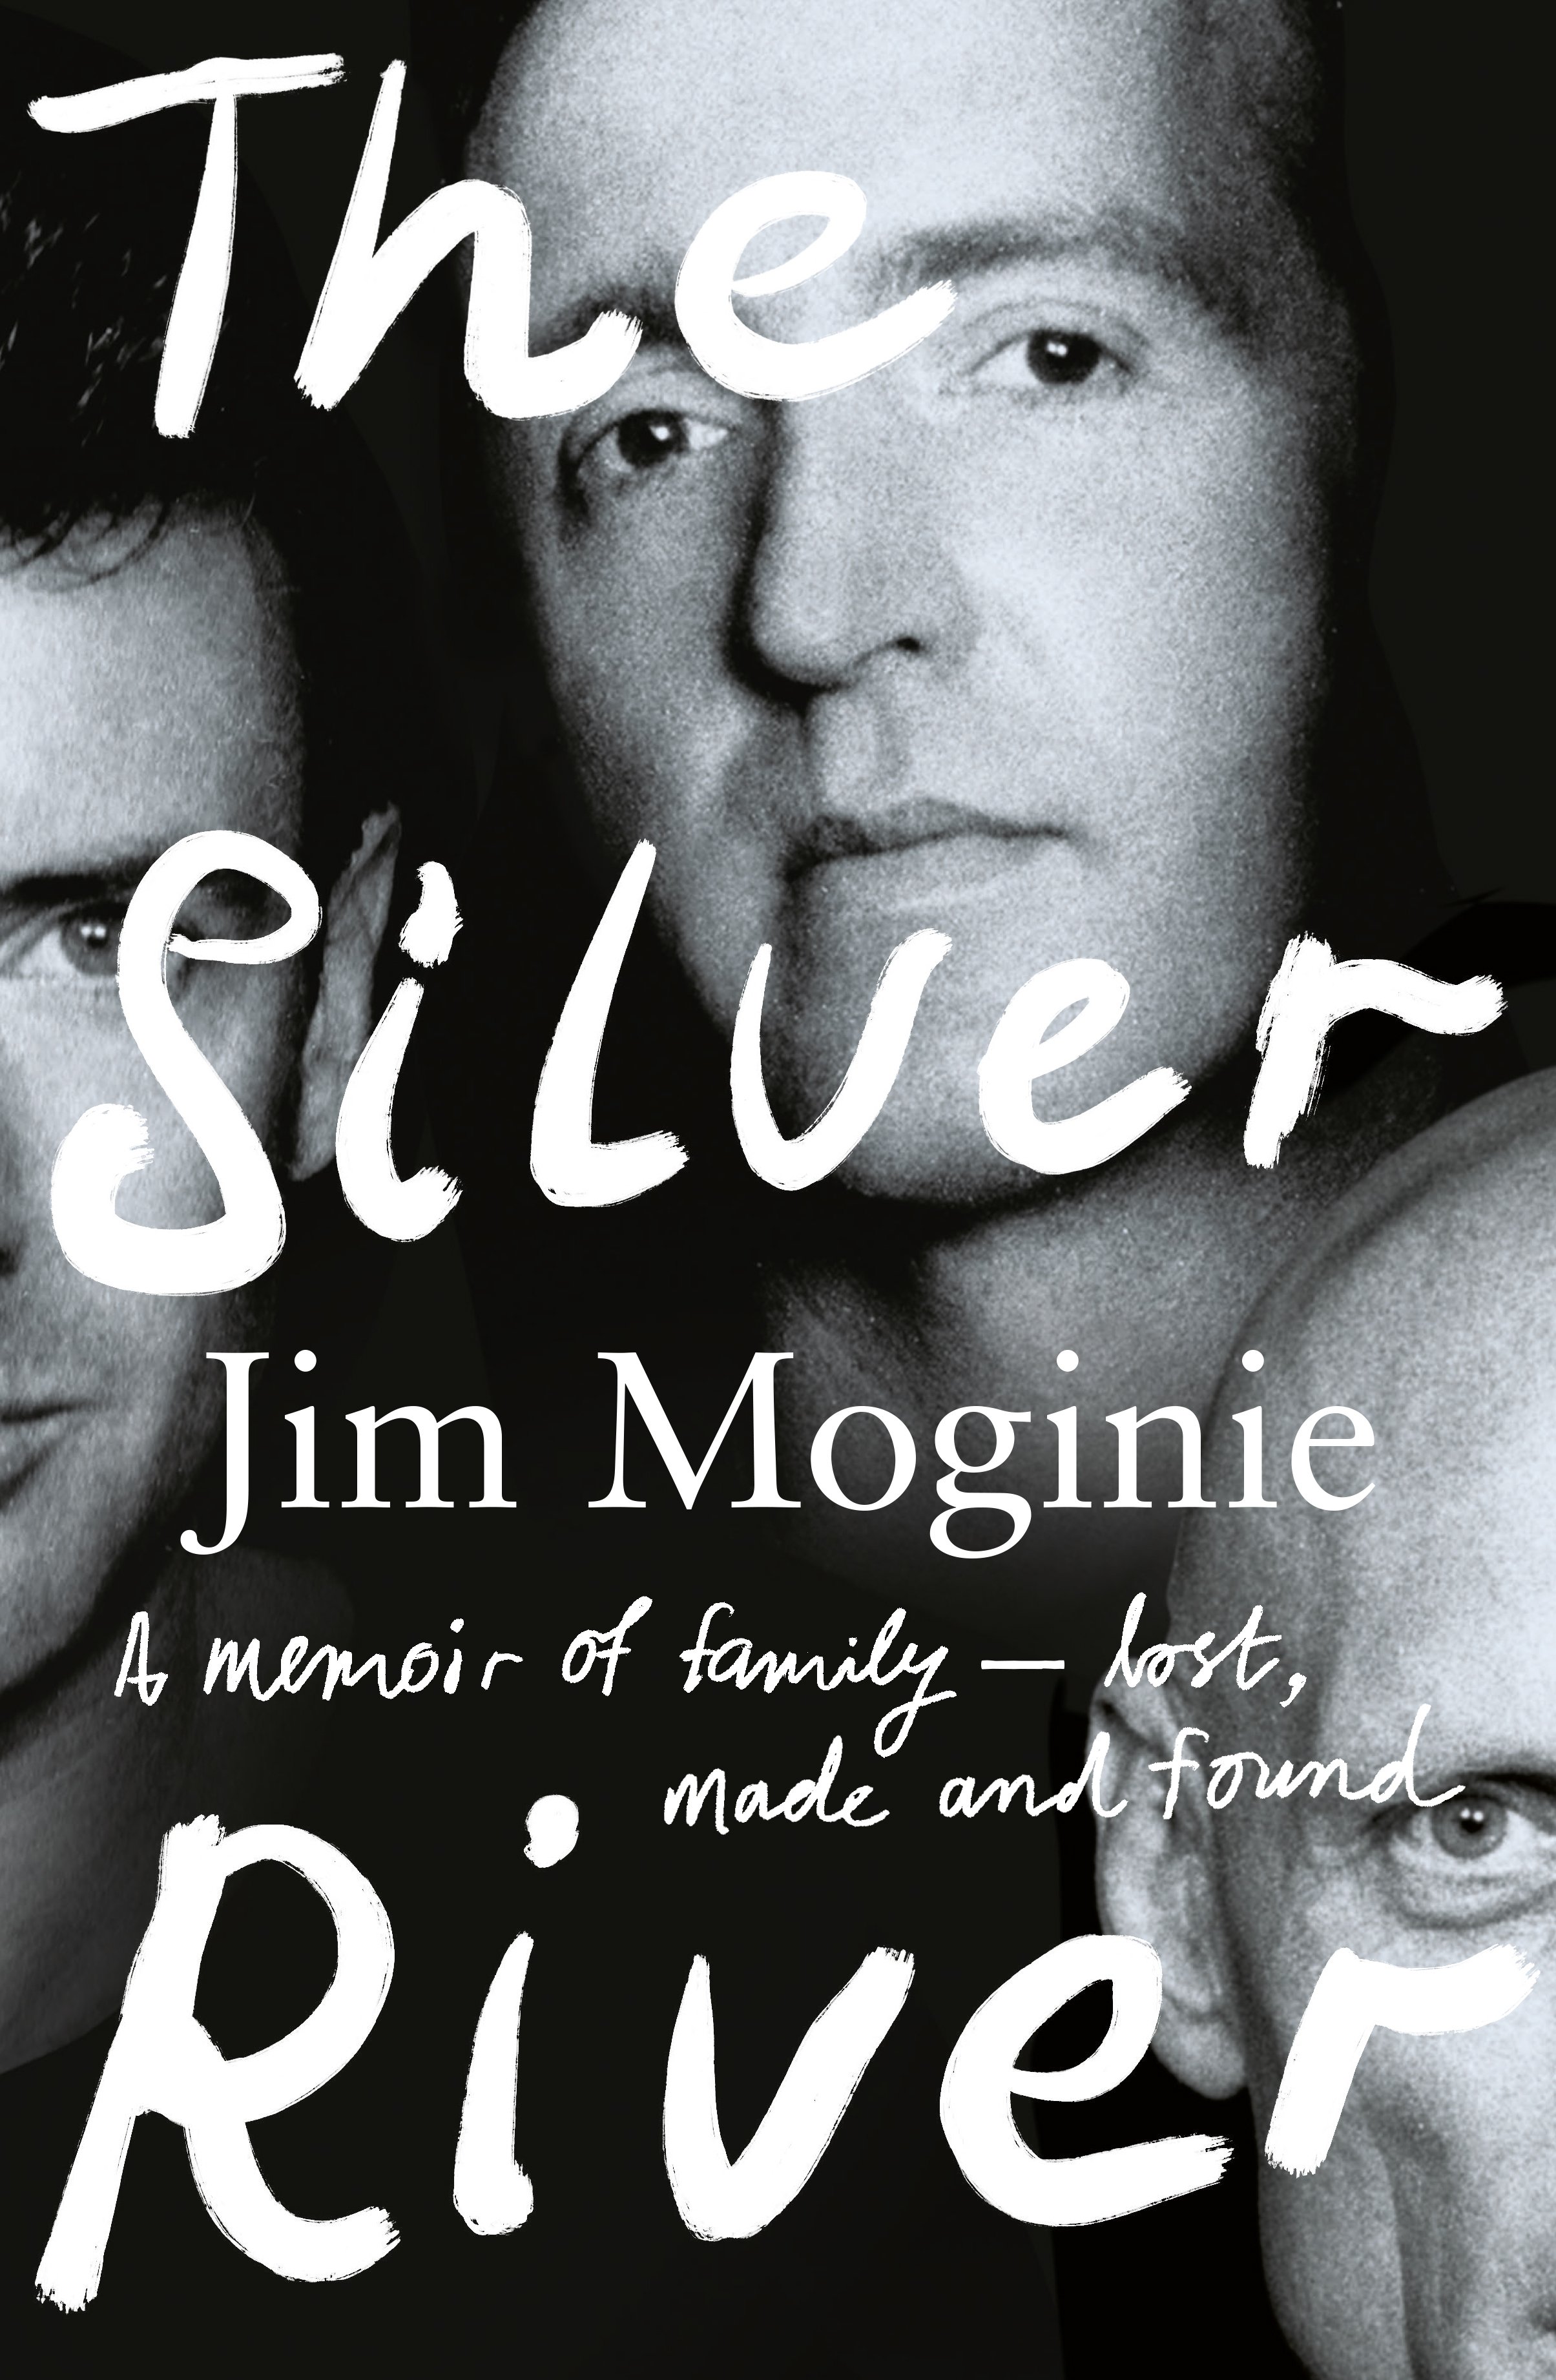 Jim Moginie - Silver River.jpg